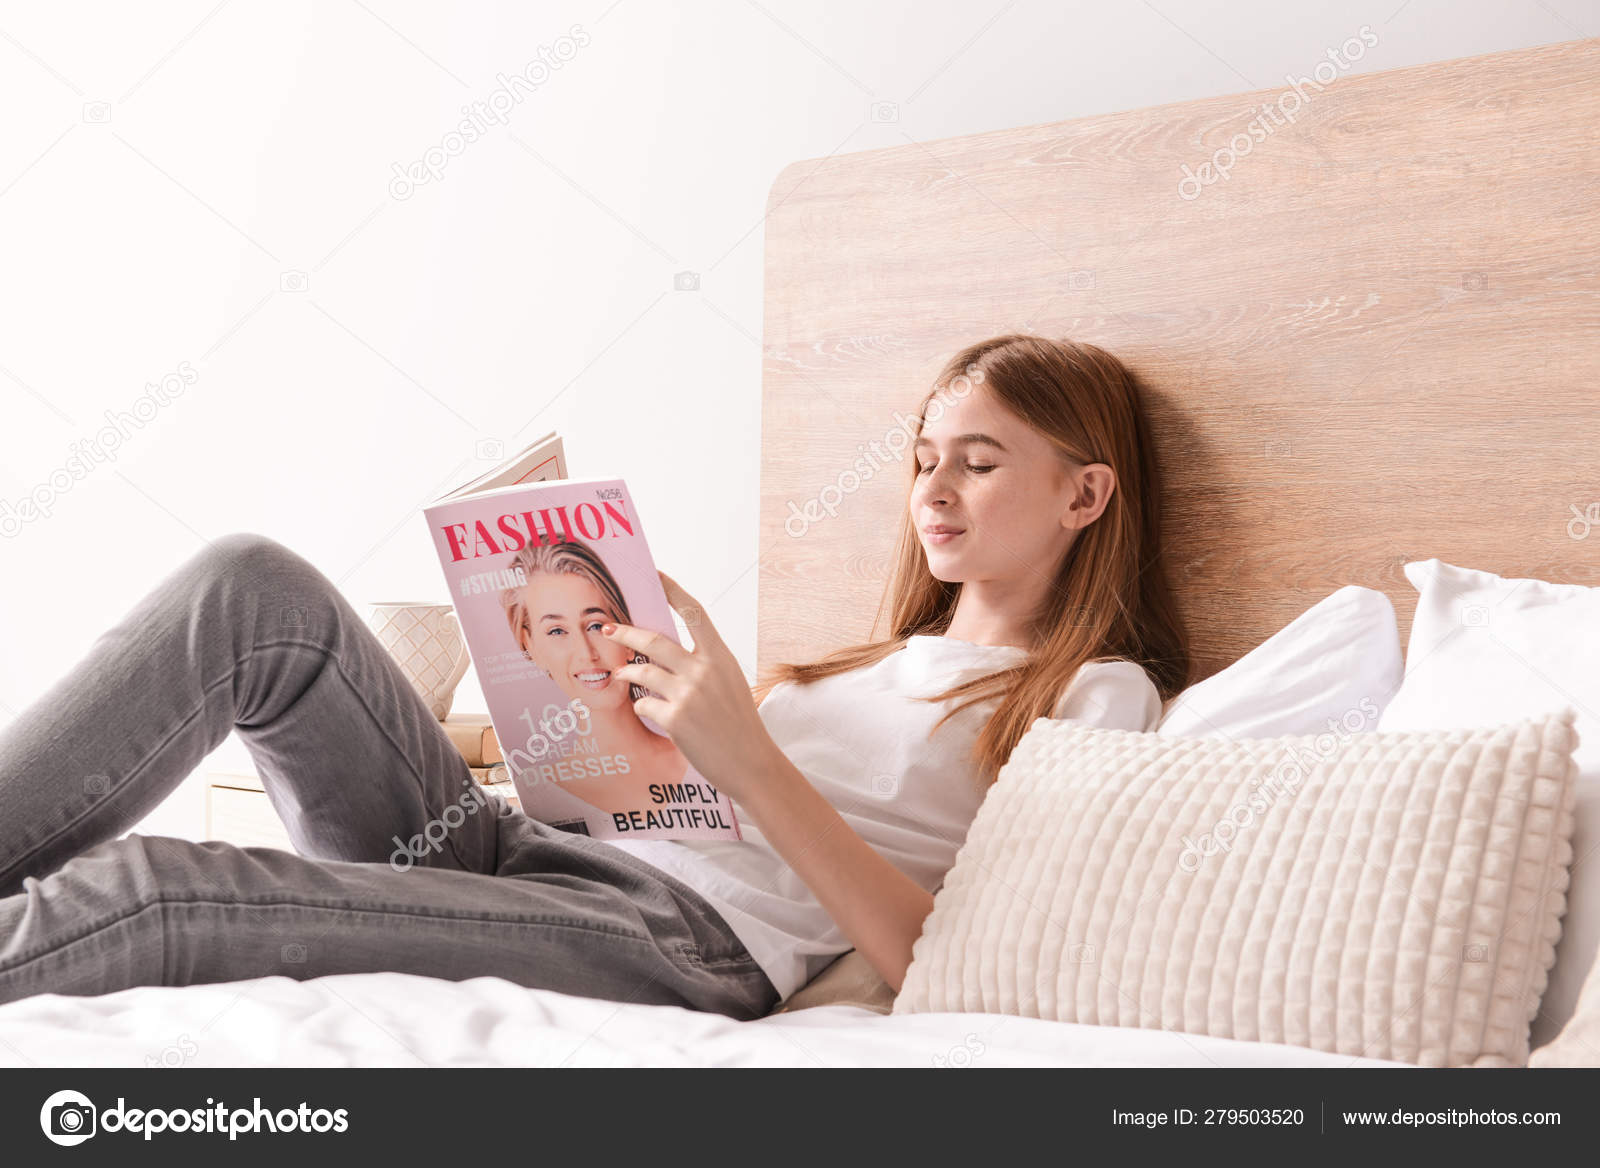  Bedroom Canvas Wall Art Girl Reading Fashion Magazine